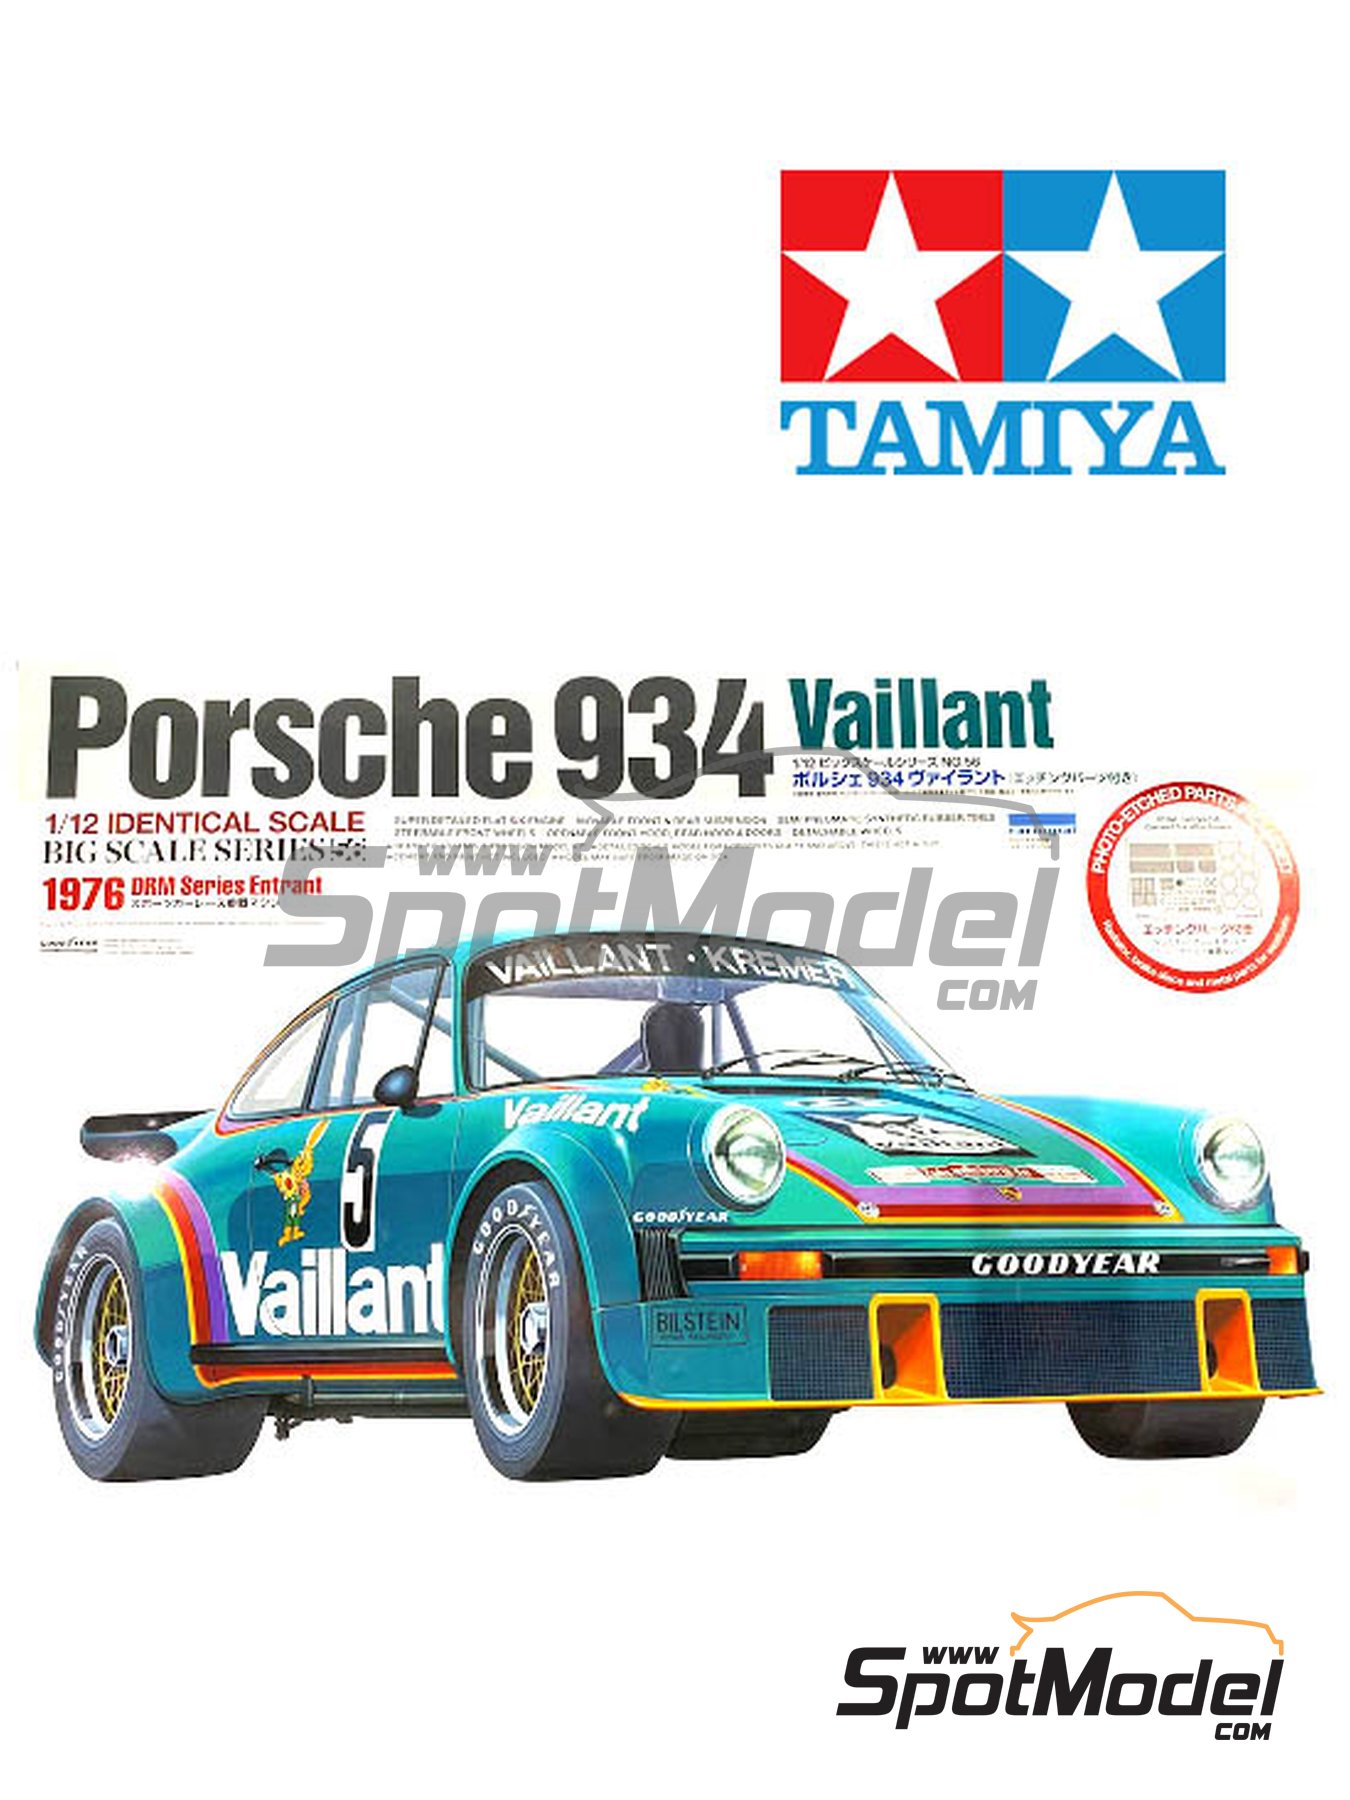 modelismo encolado Color unvarnished PE-réplica Fiel 12055 Montaje Hobby sin Pintar Kit de plástico Tamiya 1:12 Porsche 934 Jägermeister c 